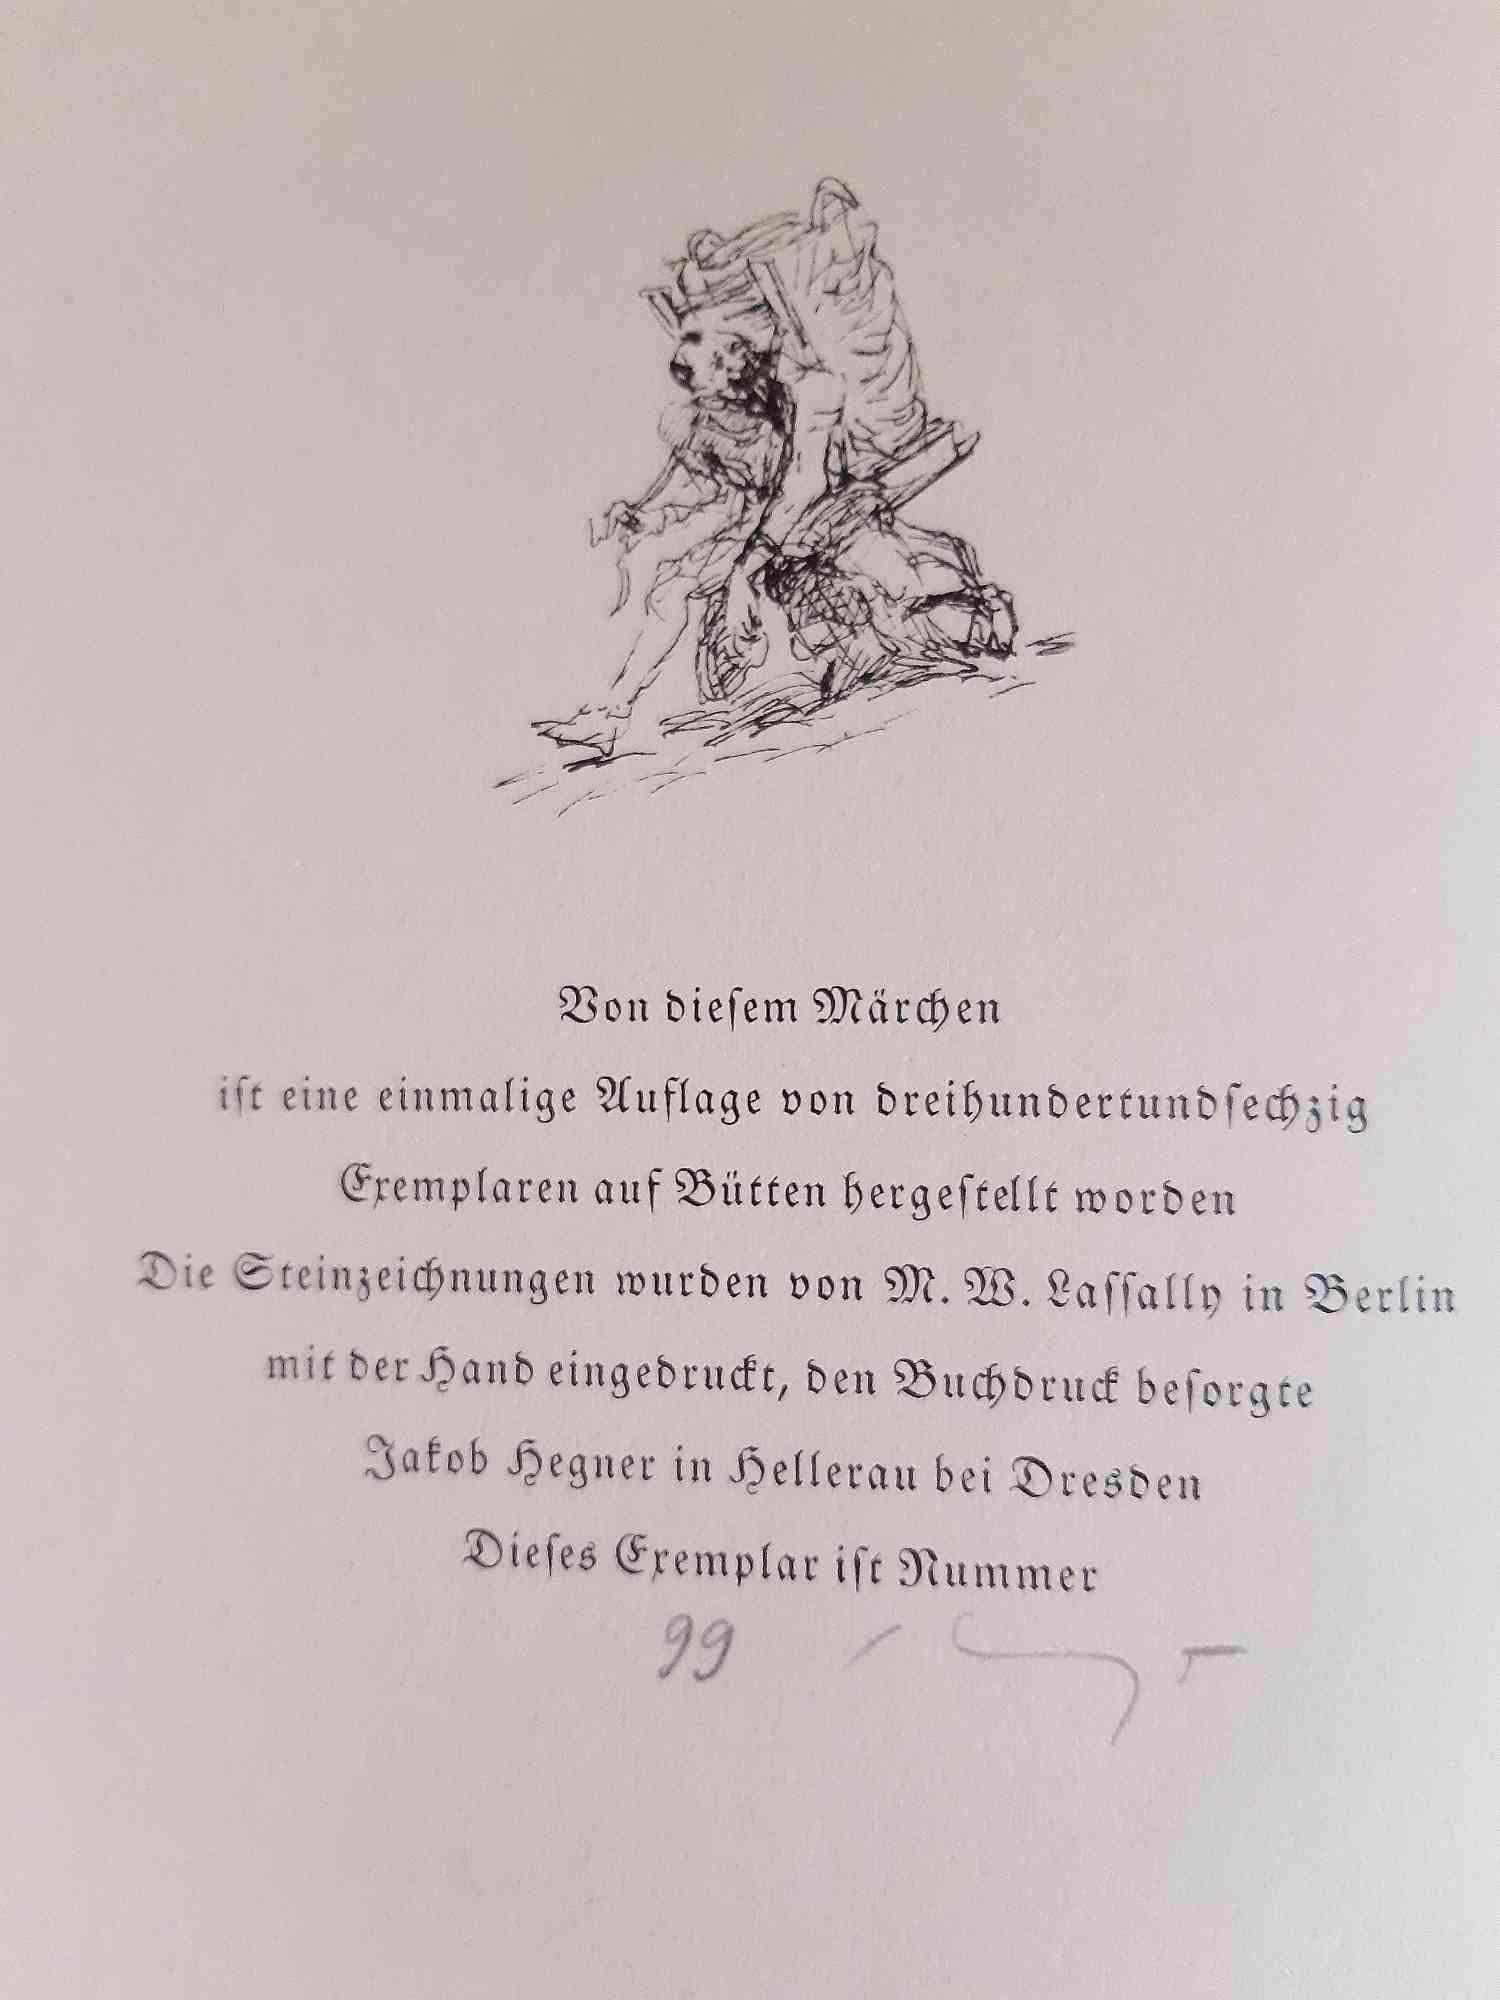 Die Tapferen Zehntausend - Original Rare Book Illustrated by Max Slevogt - 1923 For Sale 1